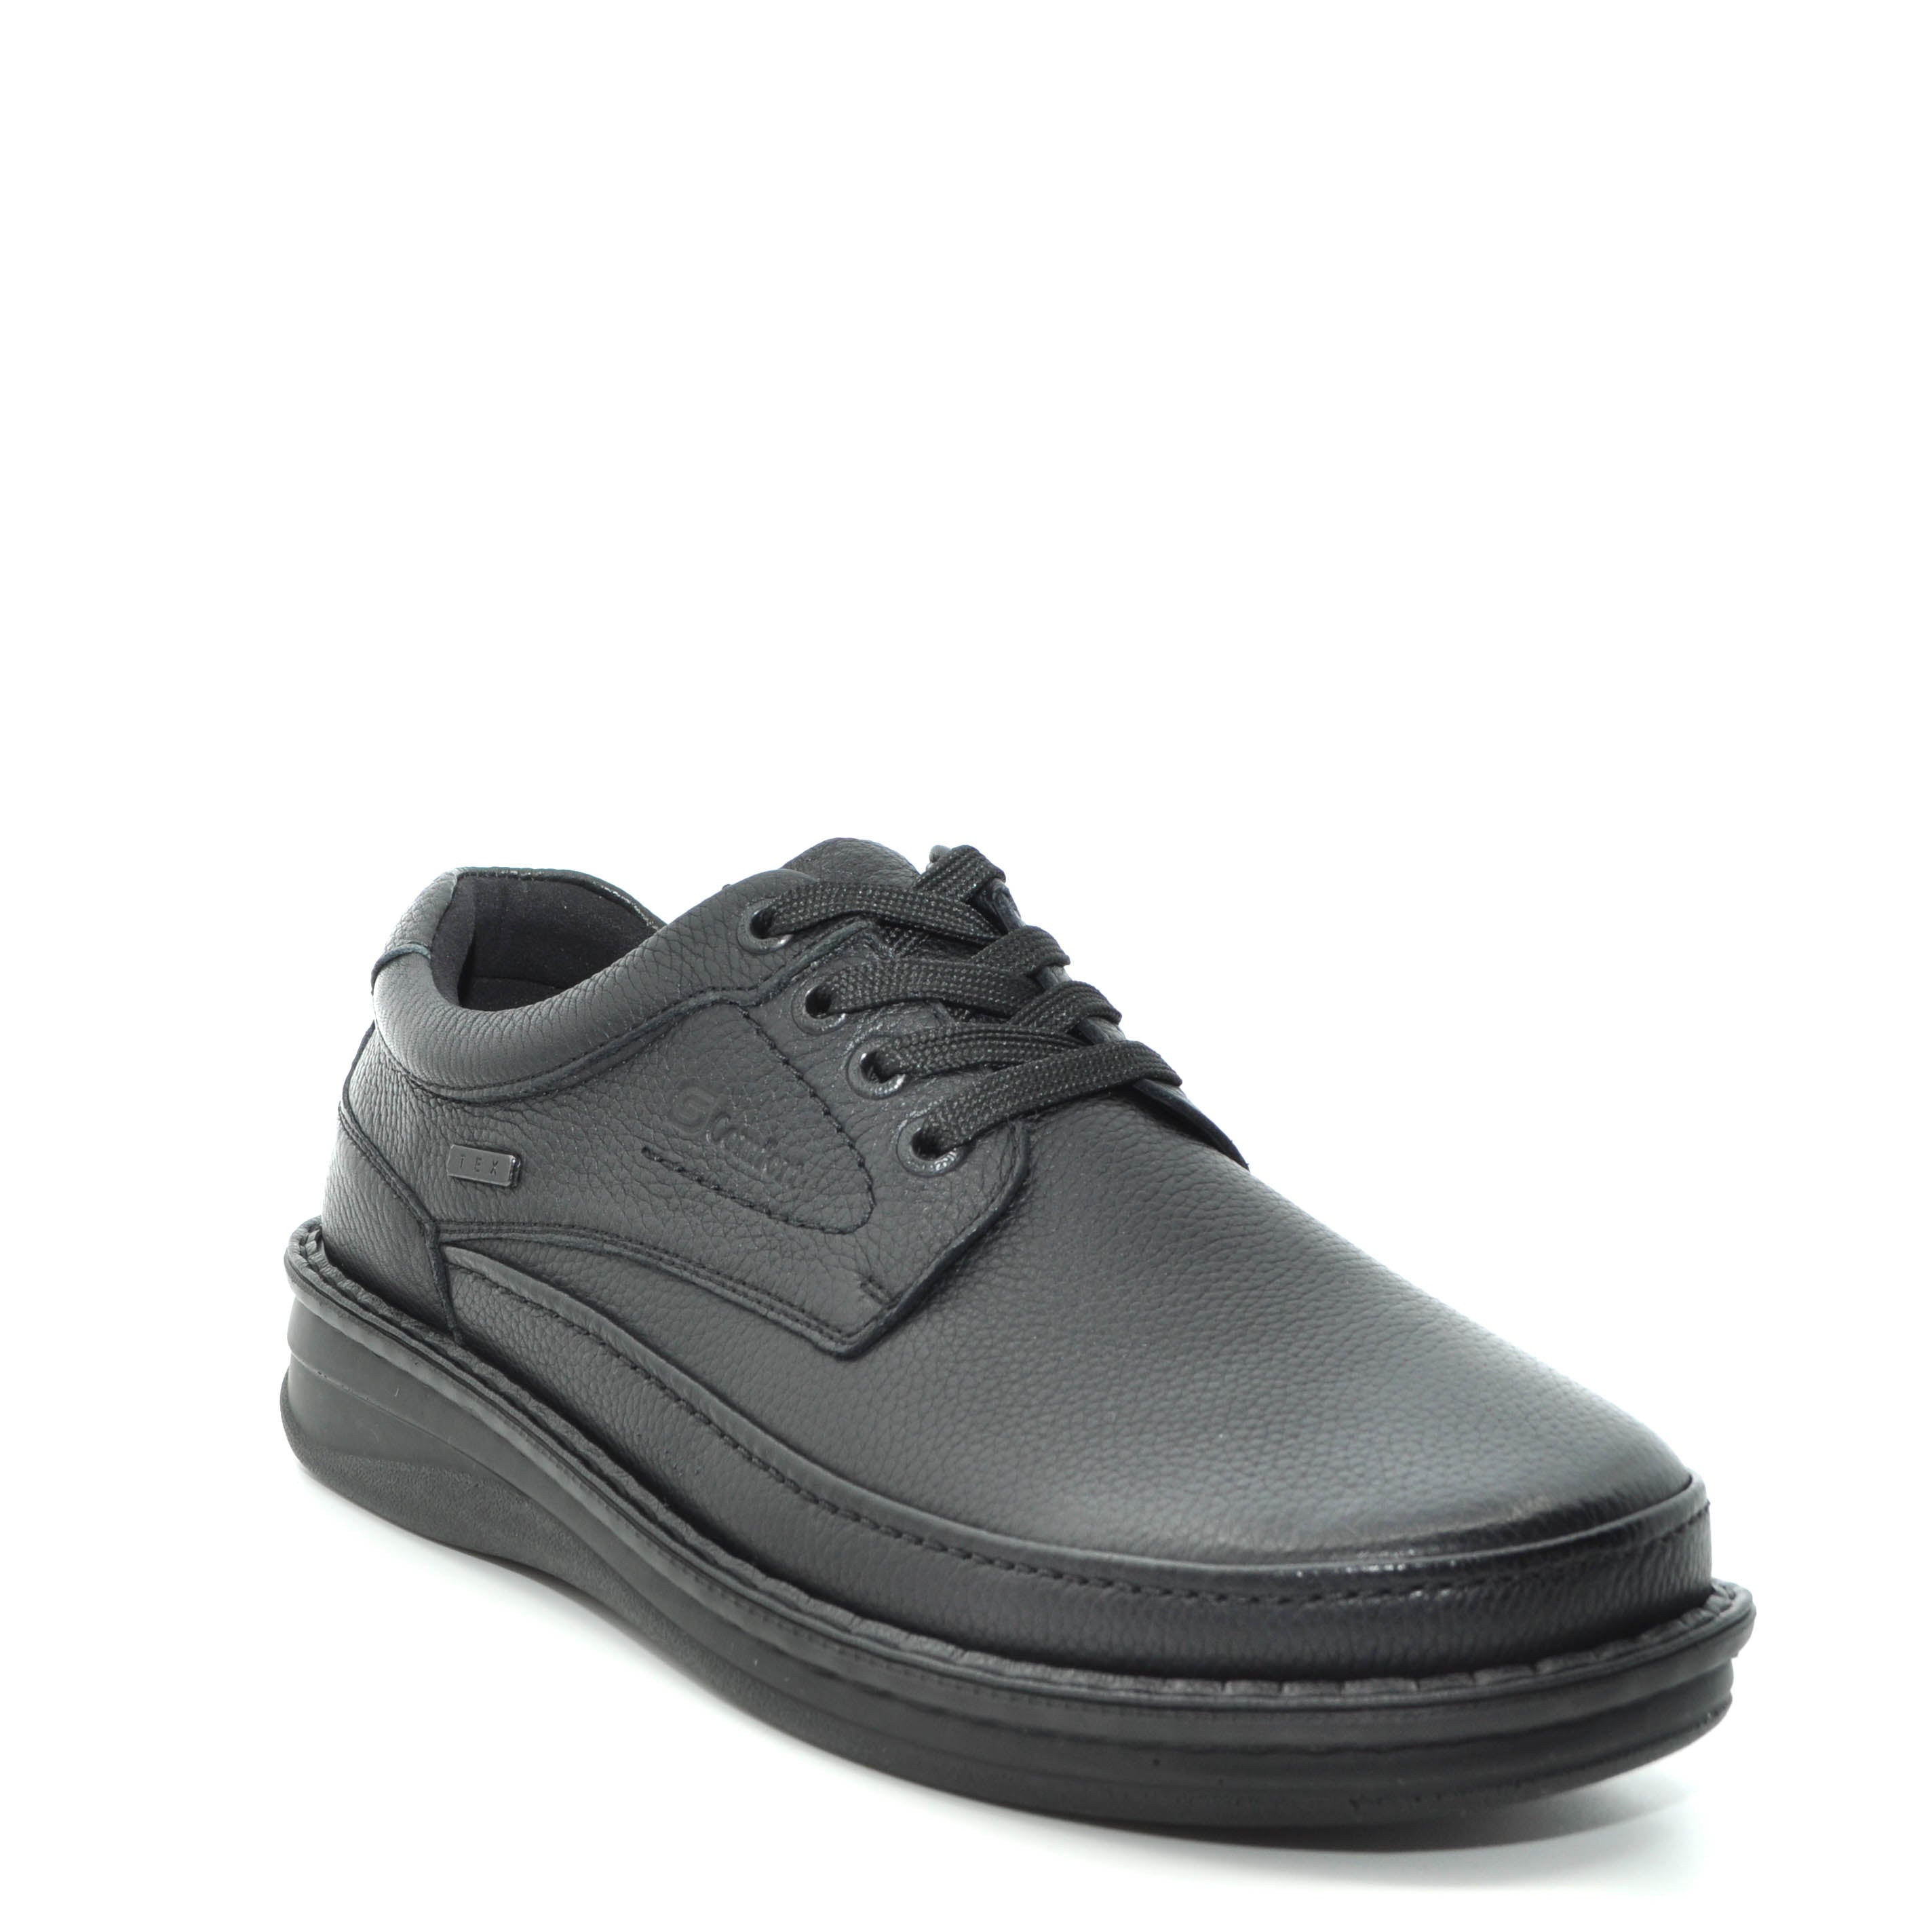 G comfort mens black shoe